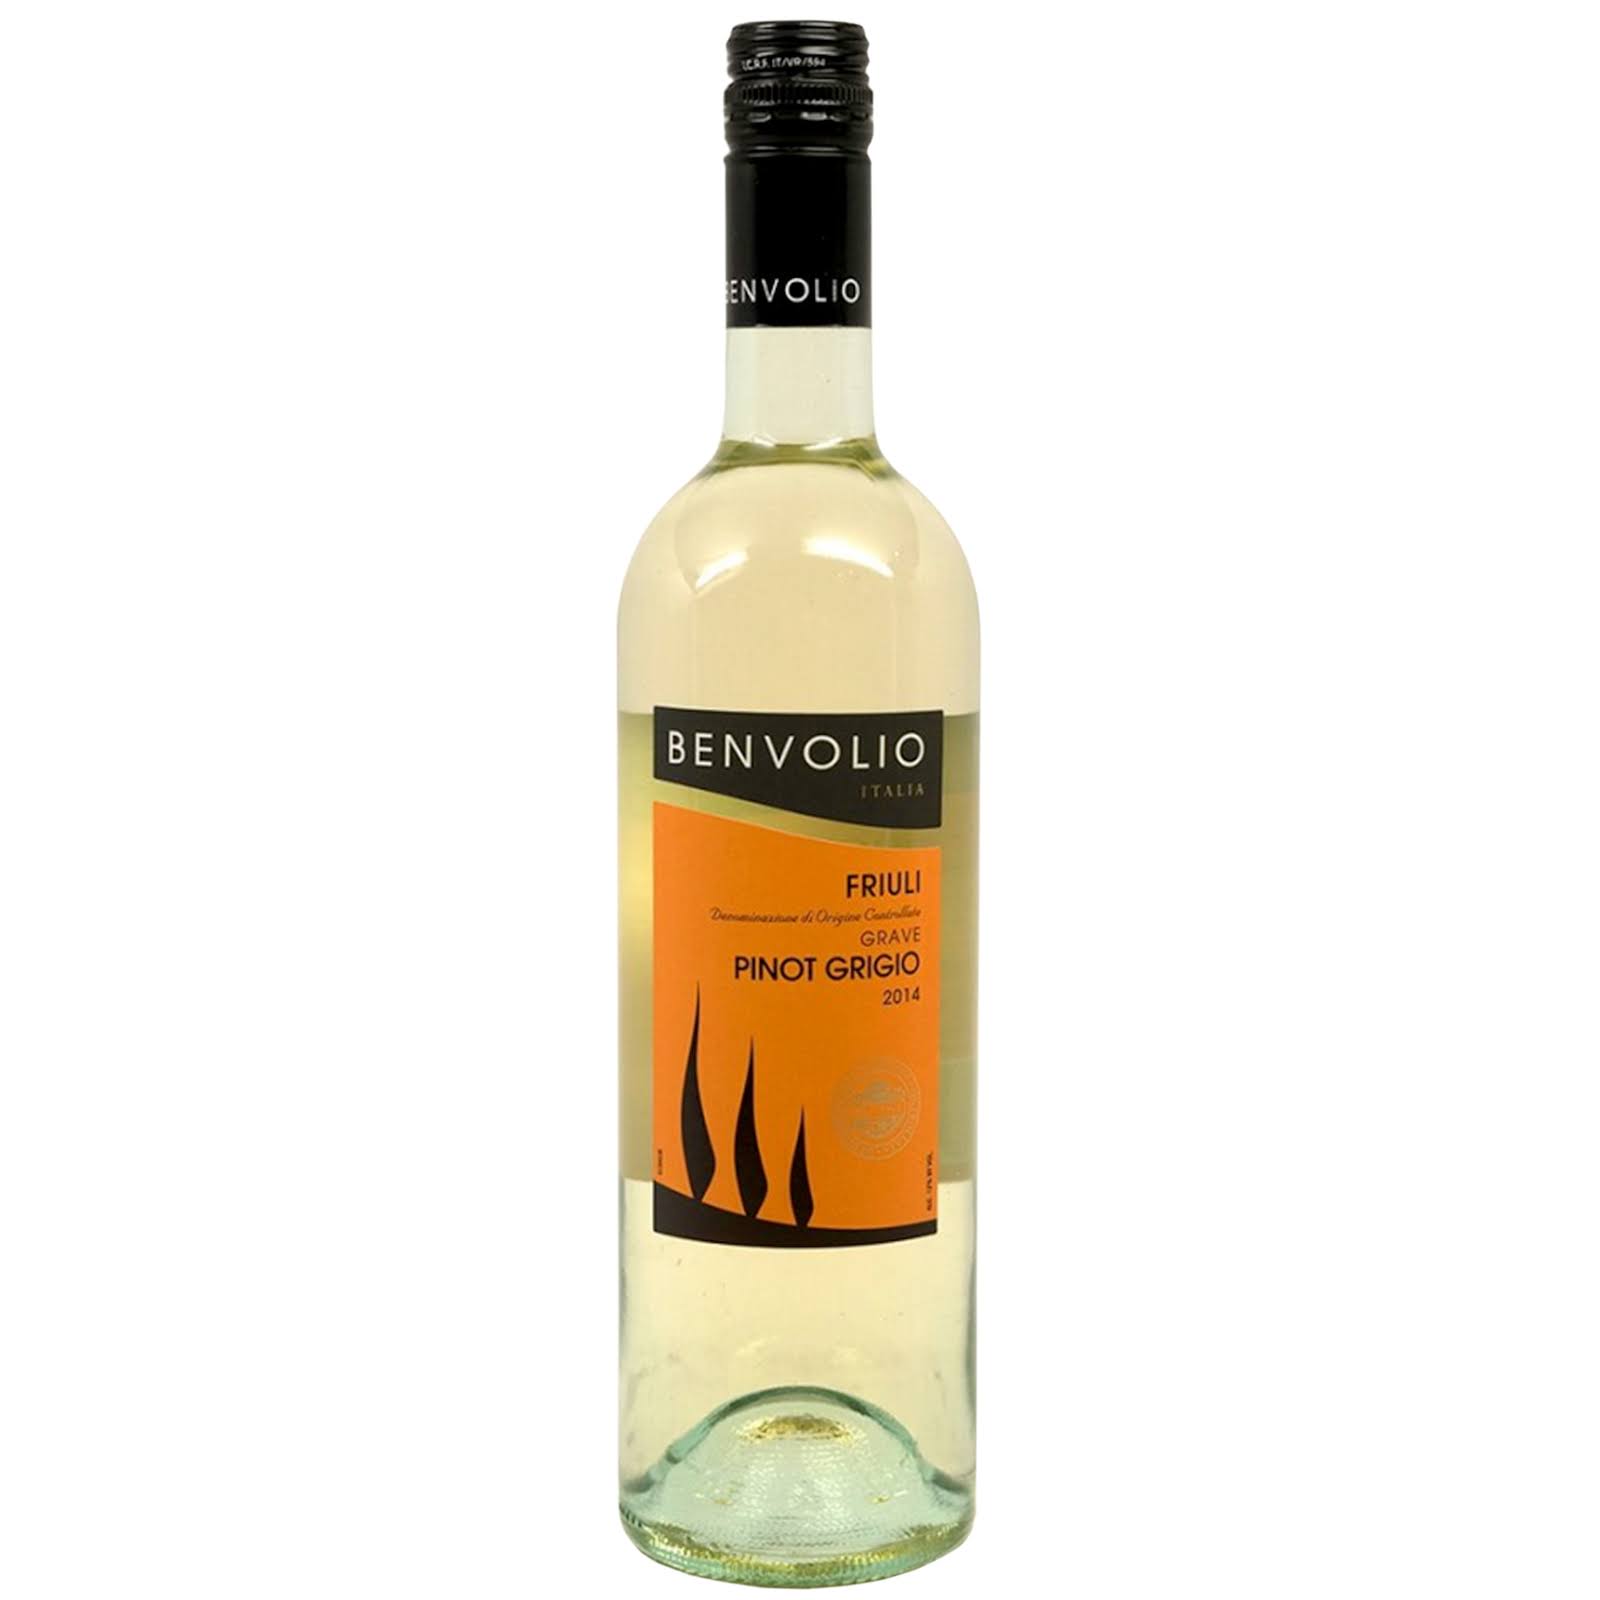 Benvolio Italia Pinot Grigio, Friuli, 2006 - 750 ml